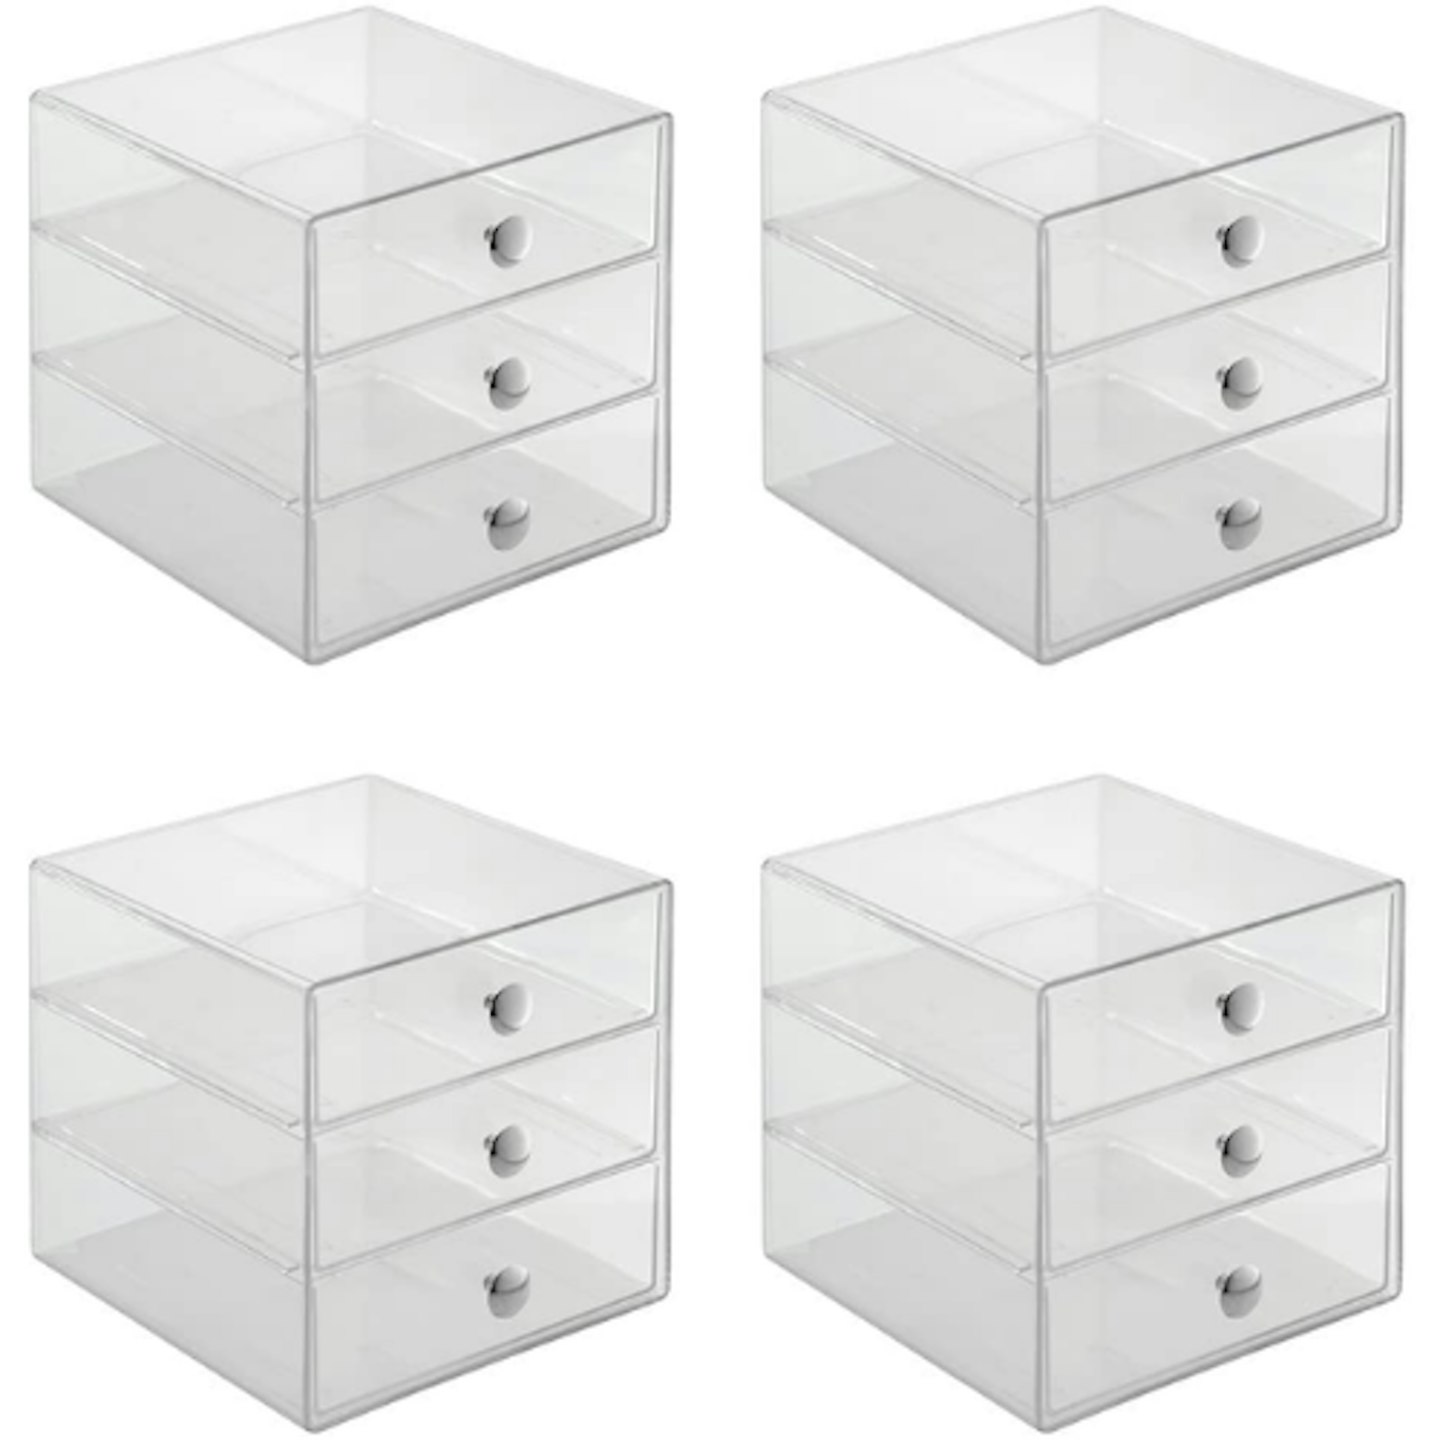 iDesign Drawers Storage Box with Drawers